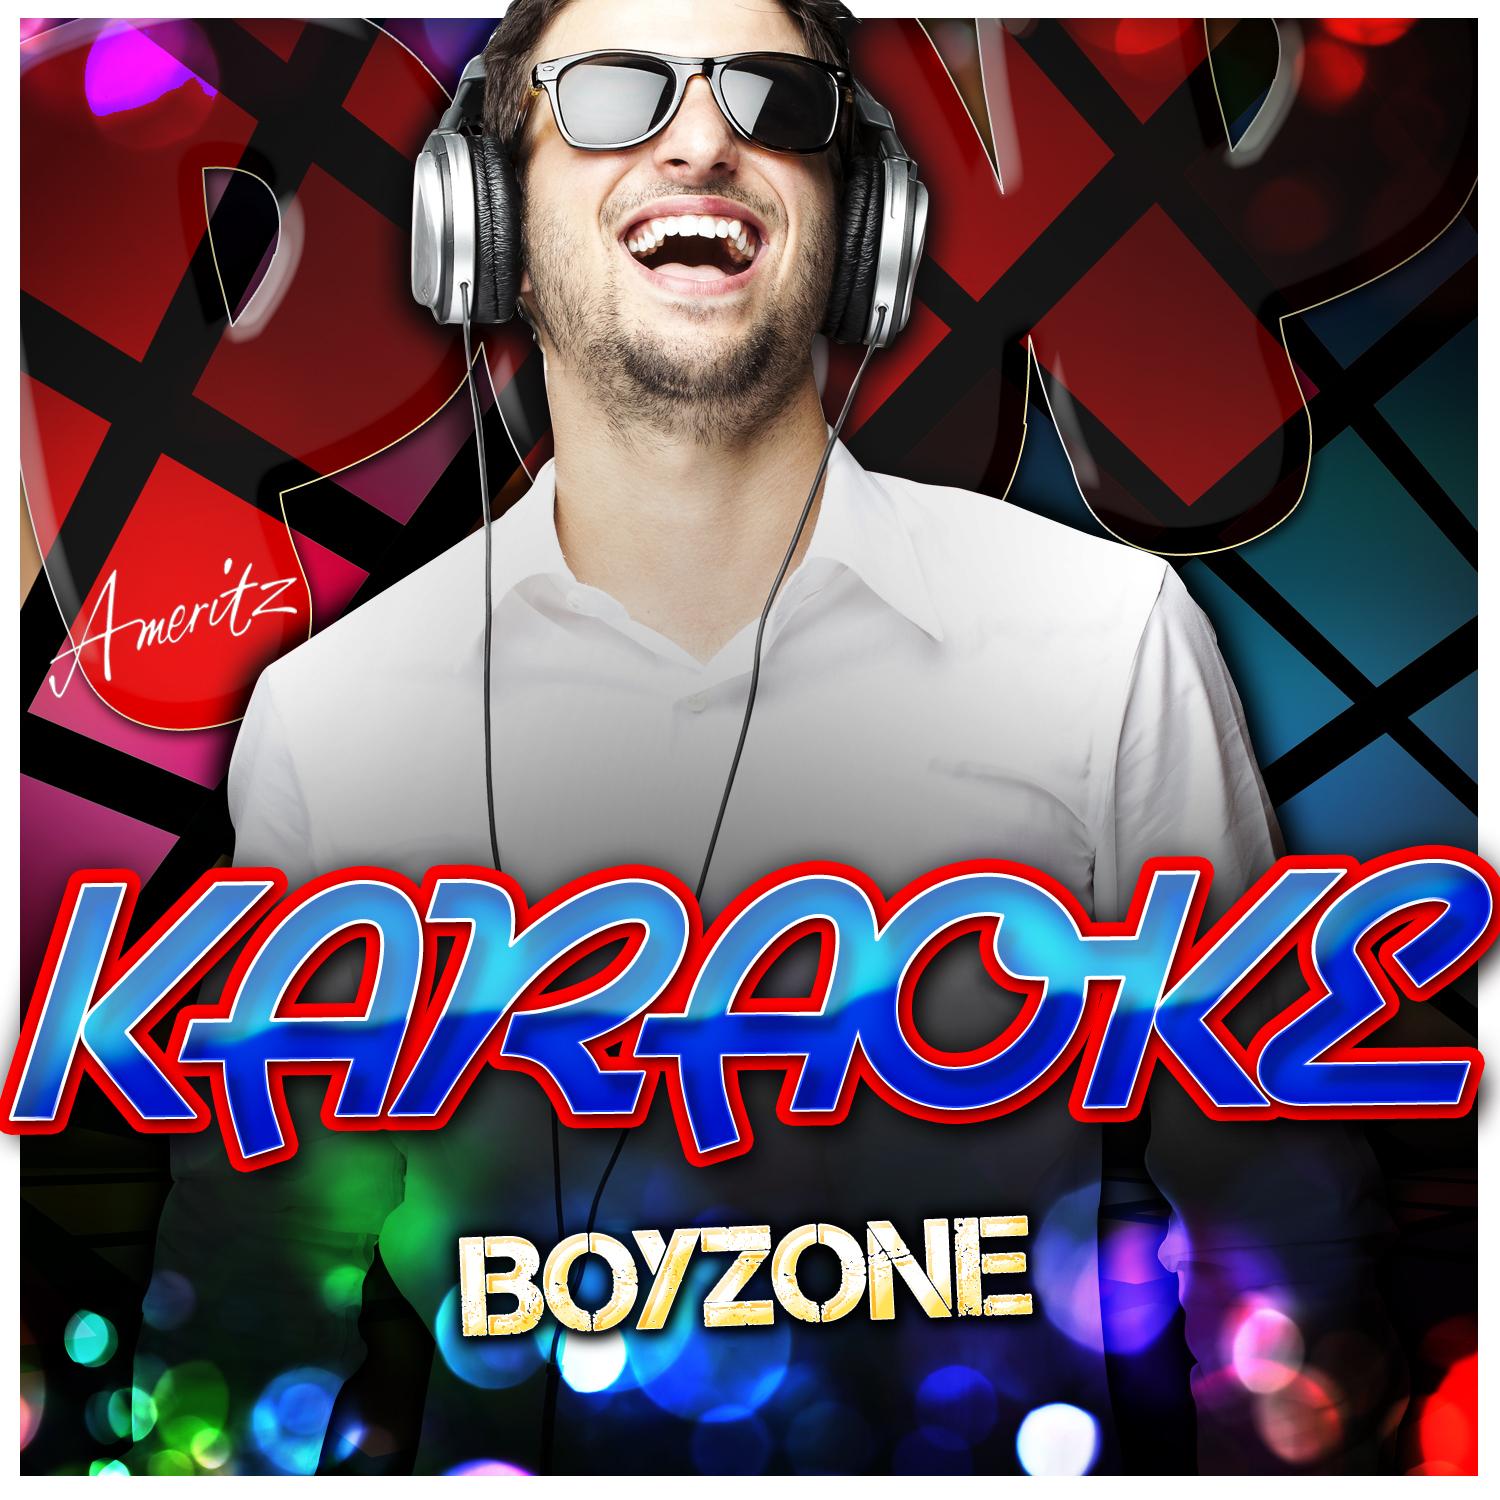 So Good (In the Style of Boyzone) [Karaoke Version]